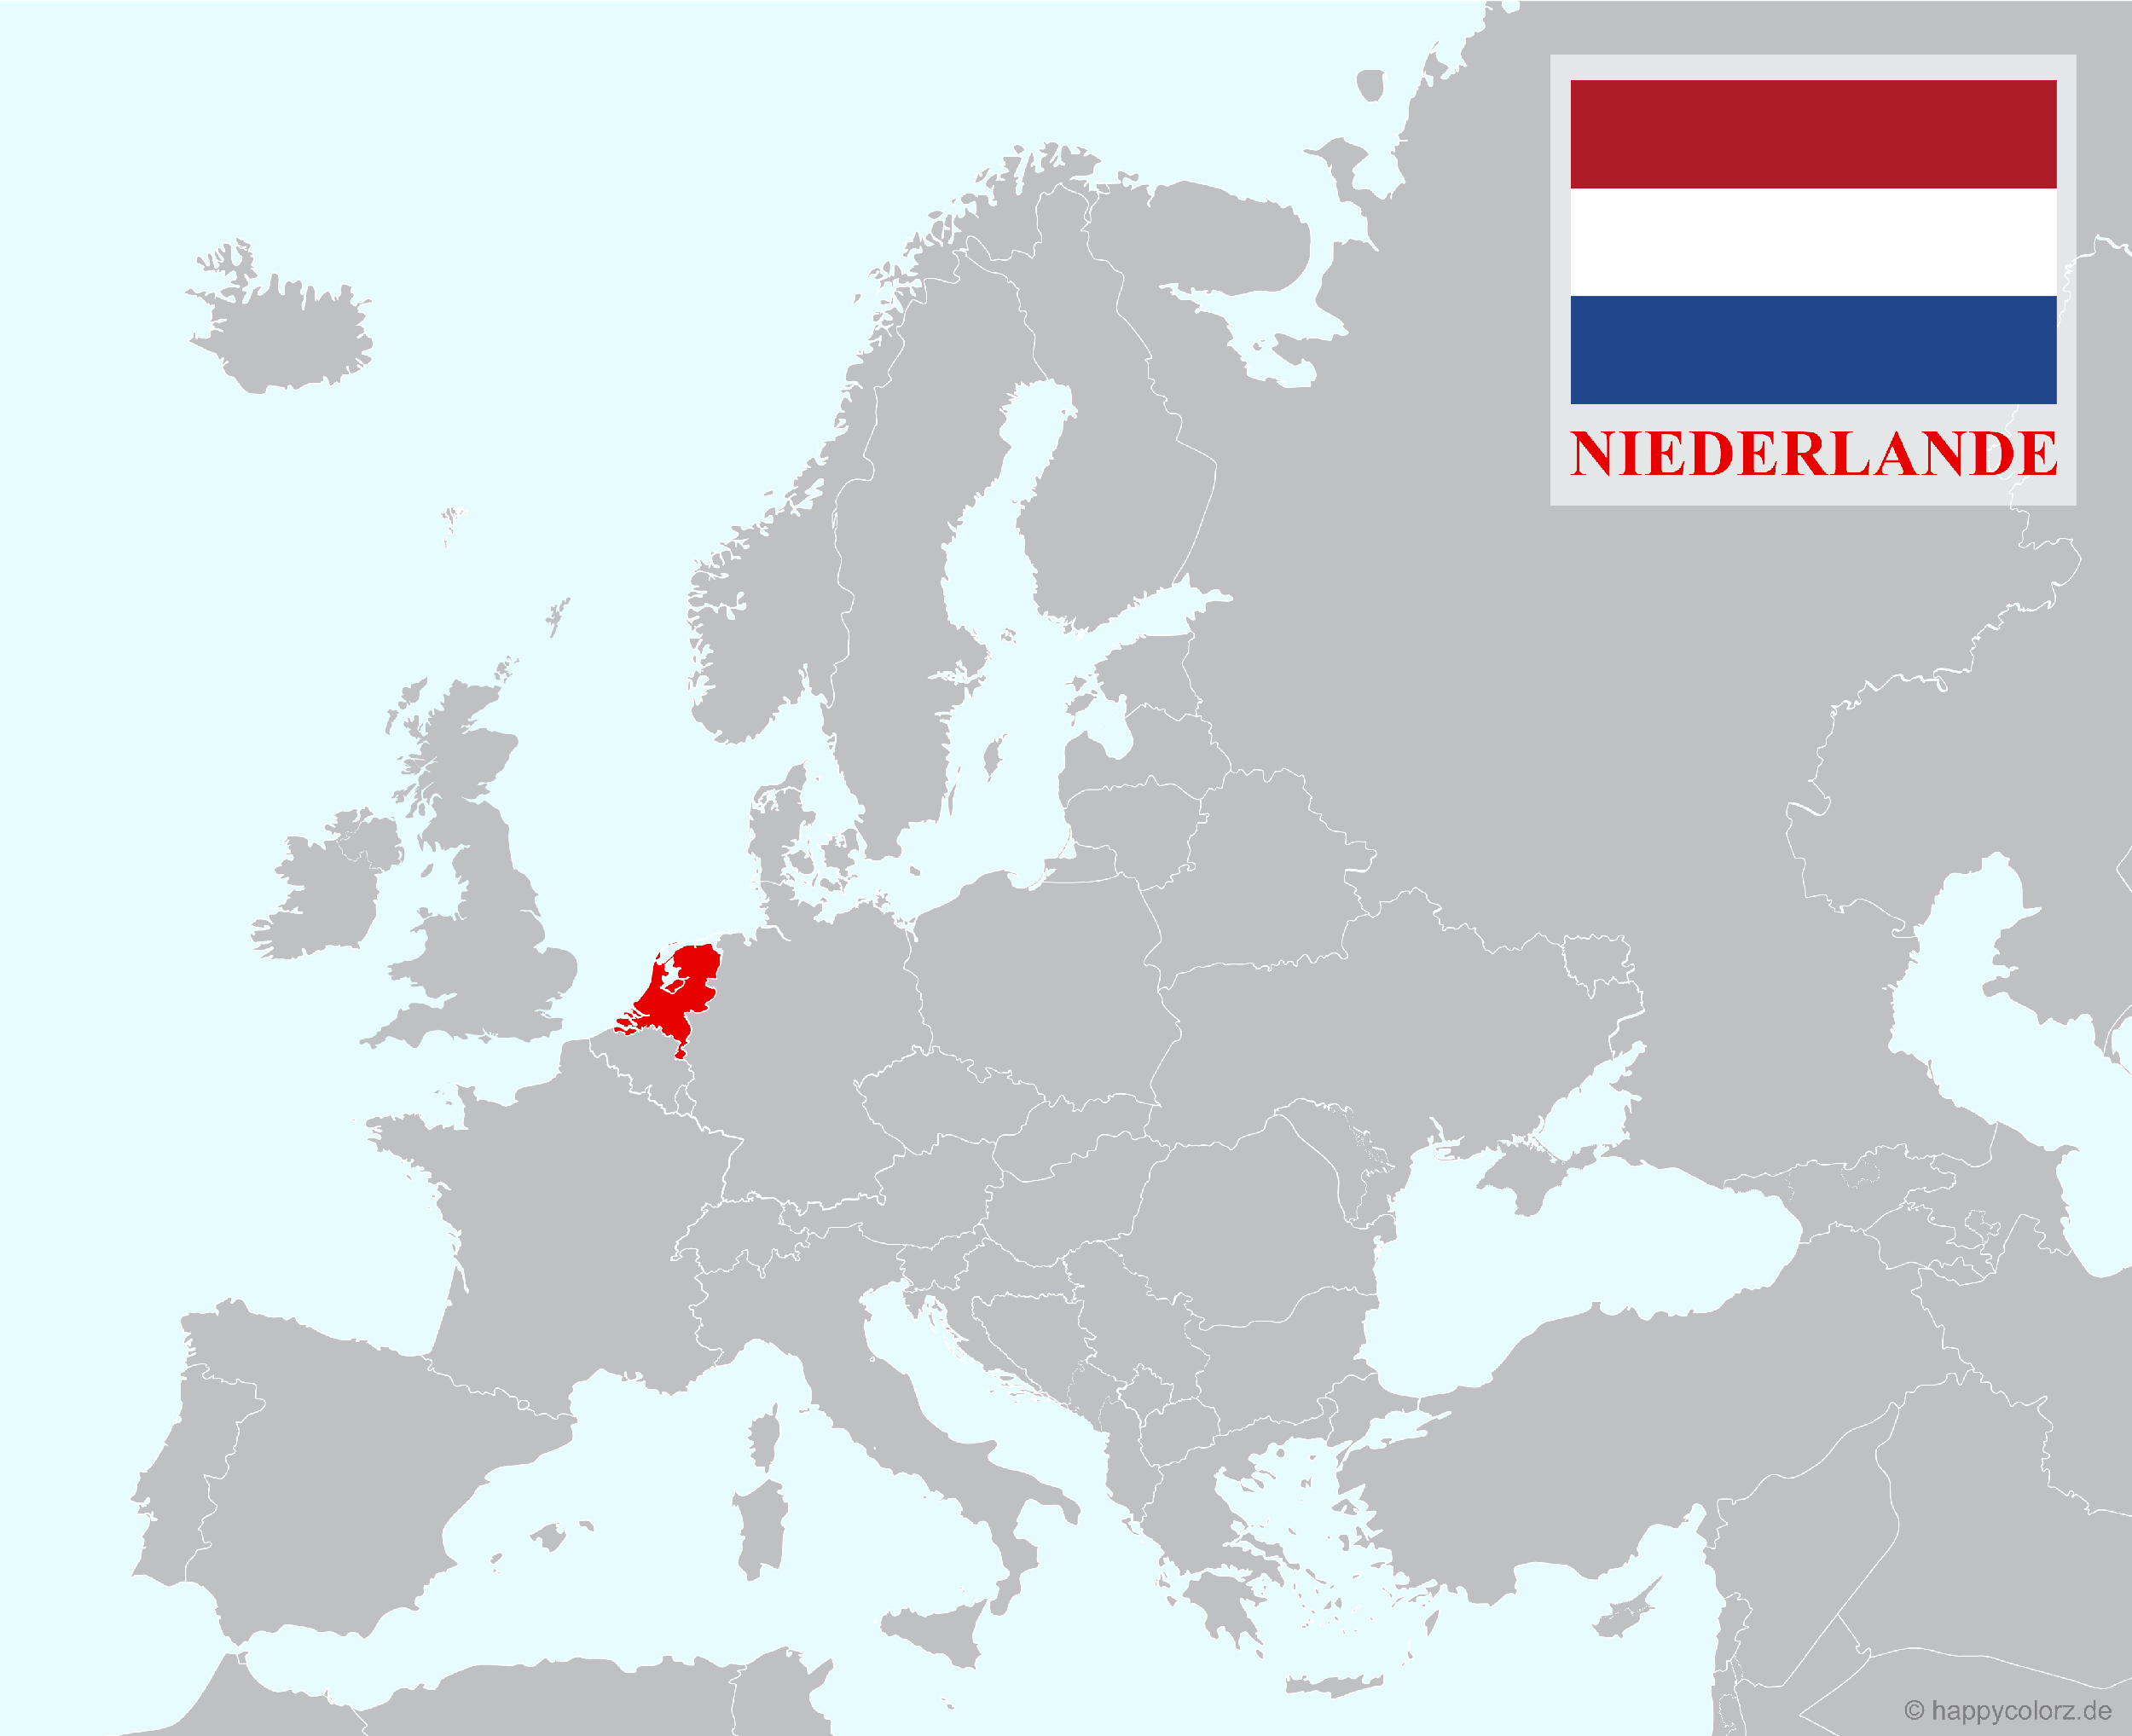 Europakarte mit Niederlande als hervorgehobenes Land